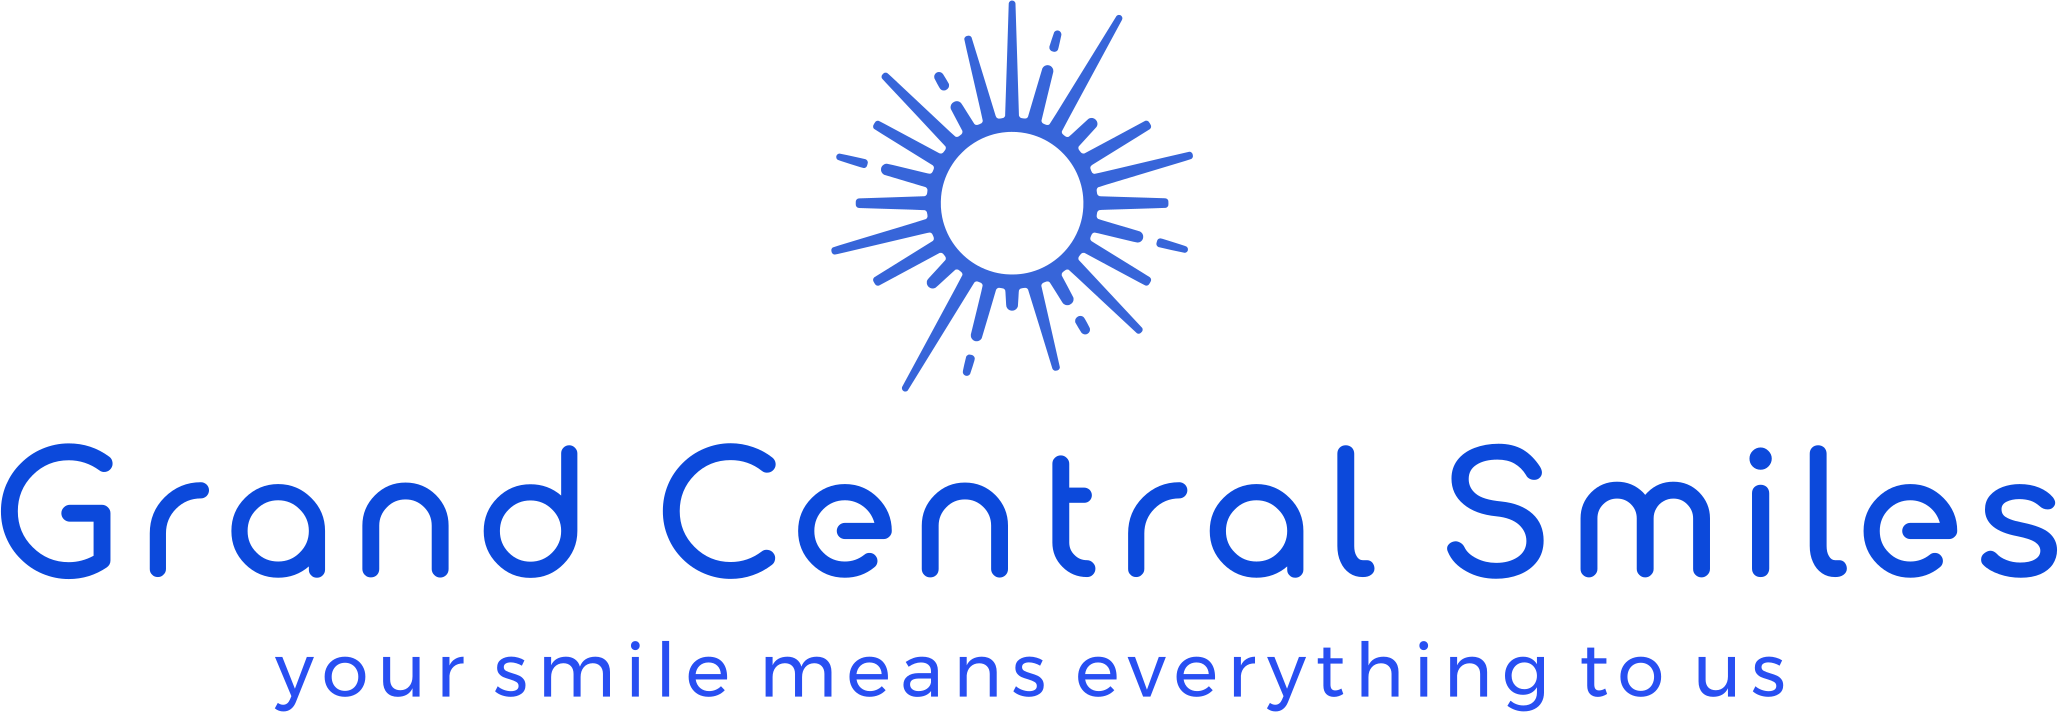 Grand Central Smiles Logo